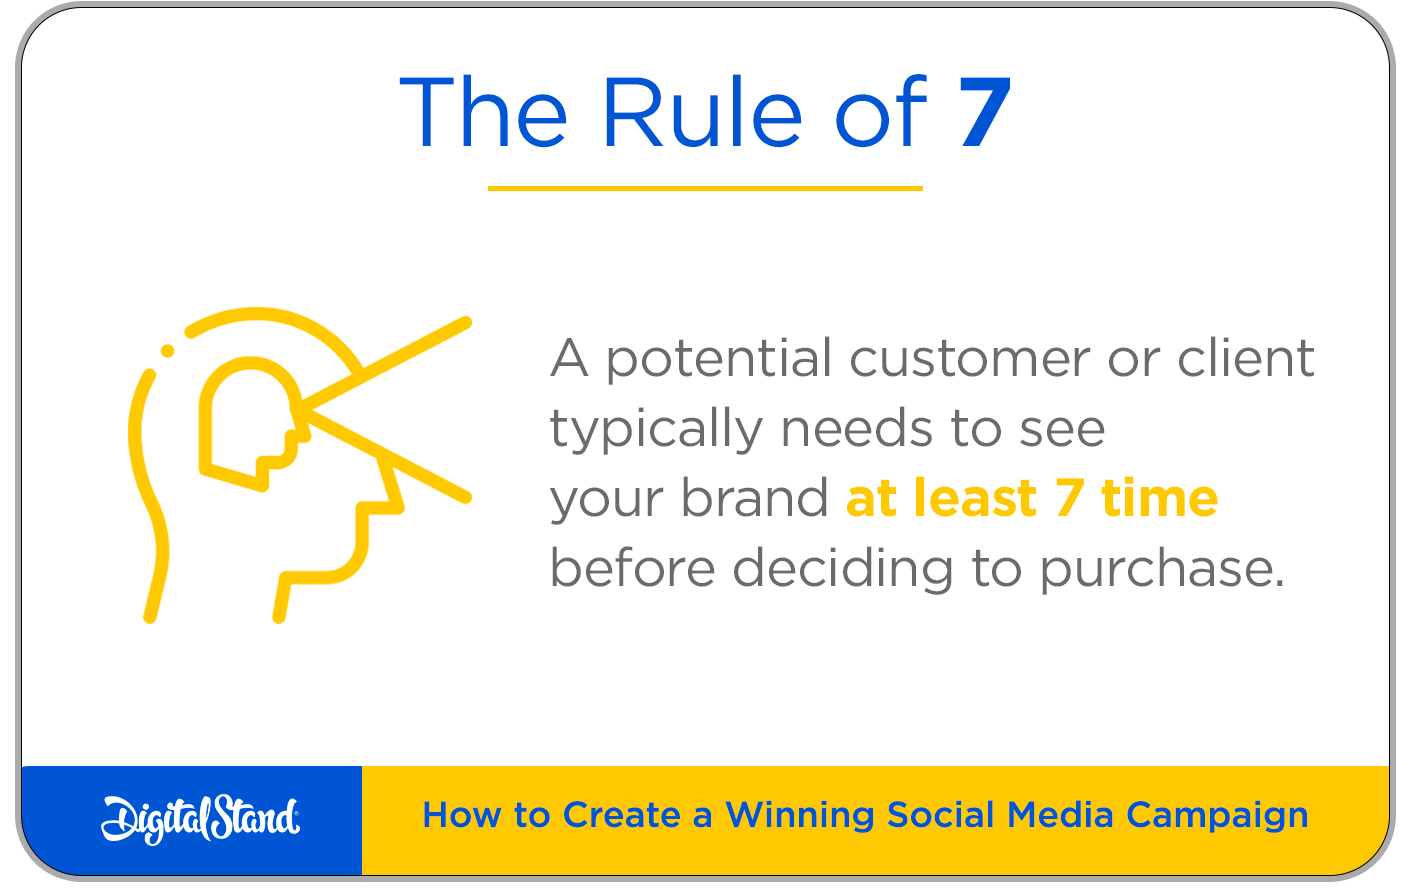 Marketing Rule of 7